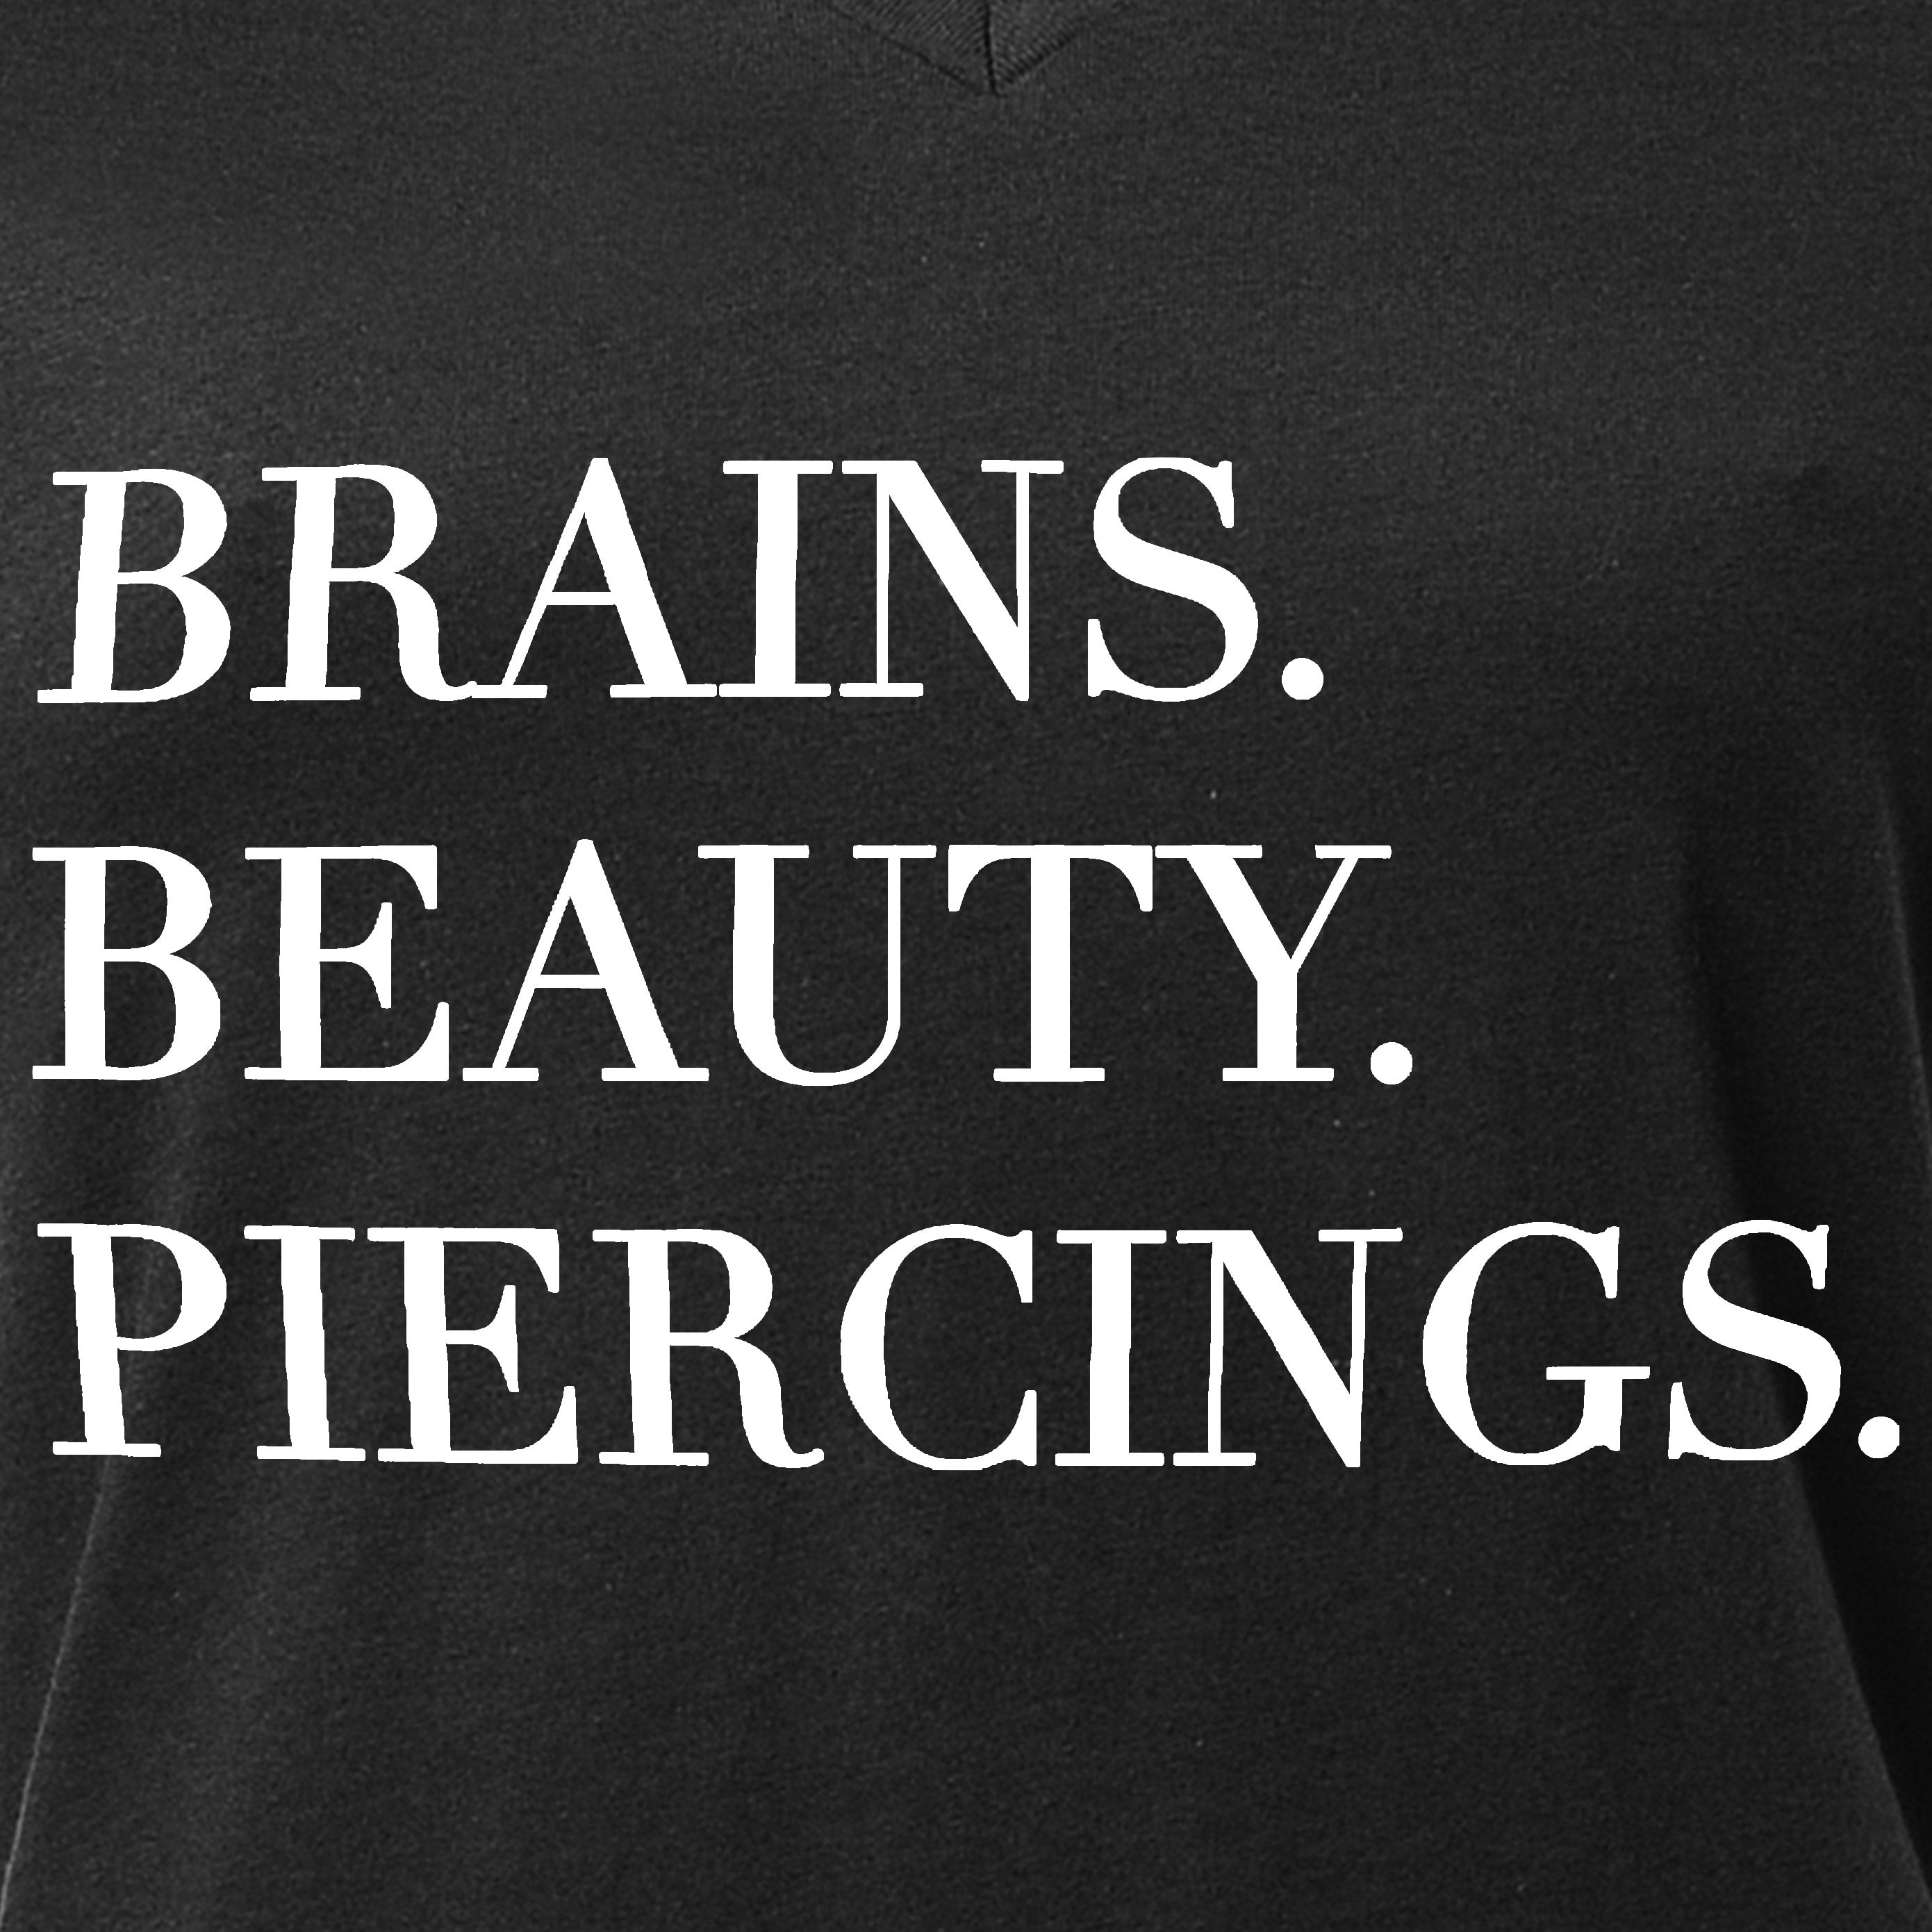 Brains Beauty & Piercings Tapered V-Neck Tee Shirt